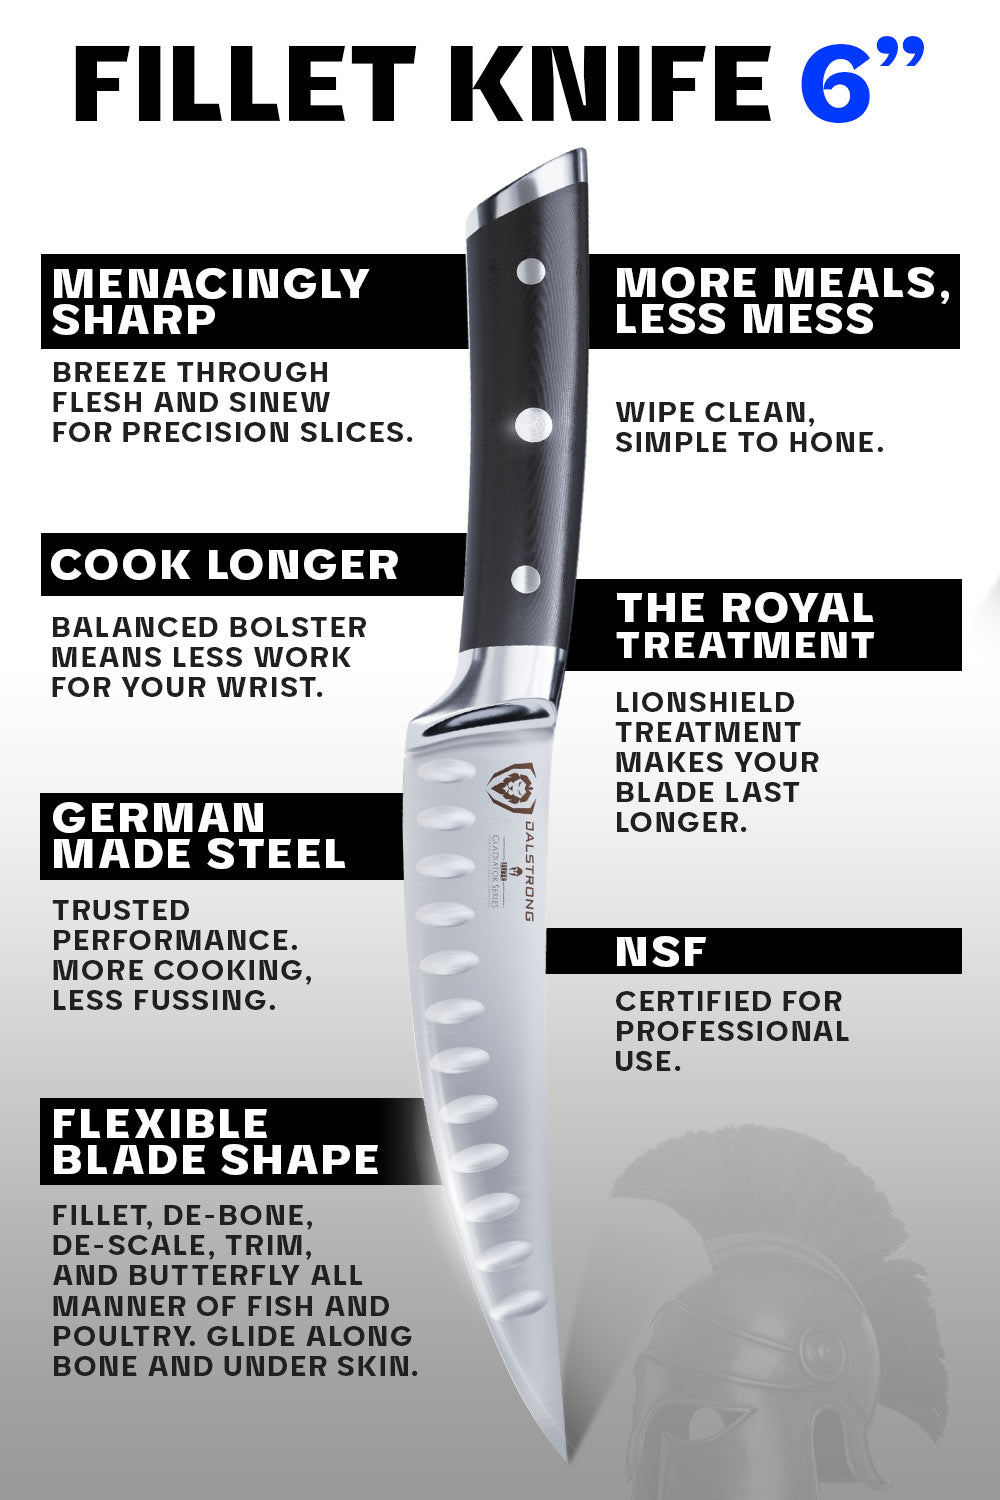 Dalstrong Gladiator Series Filet Boning Knife 6